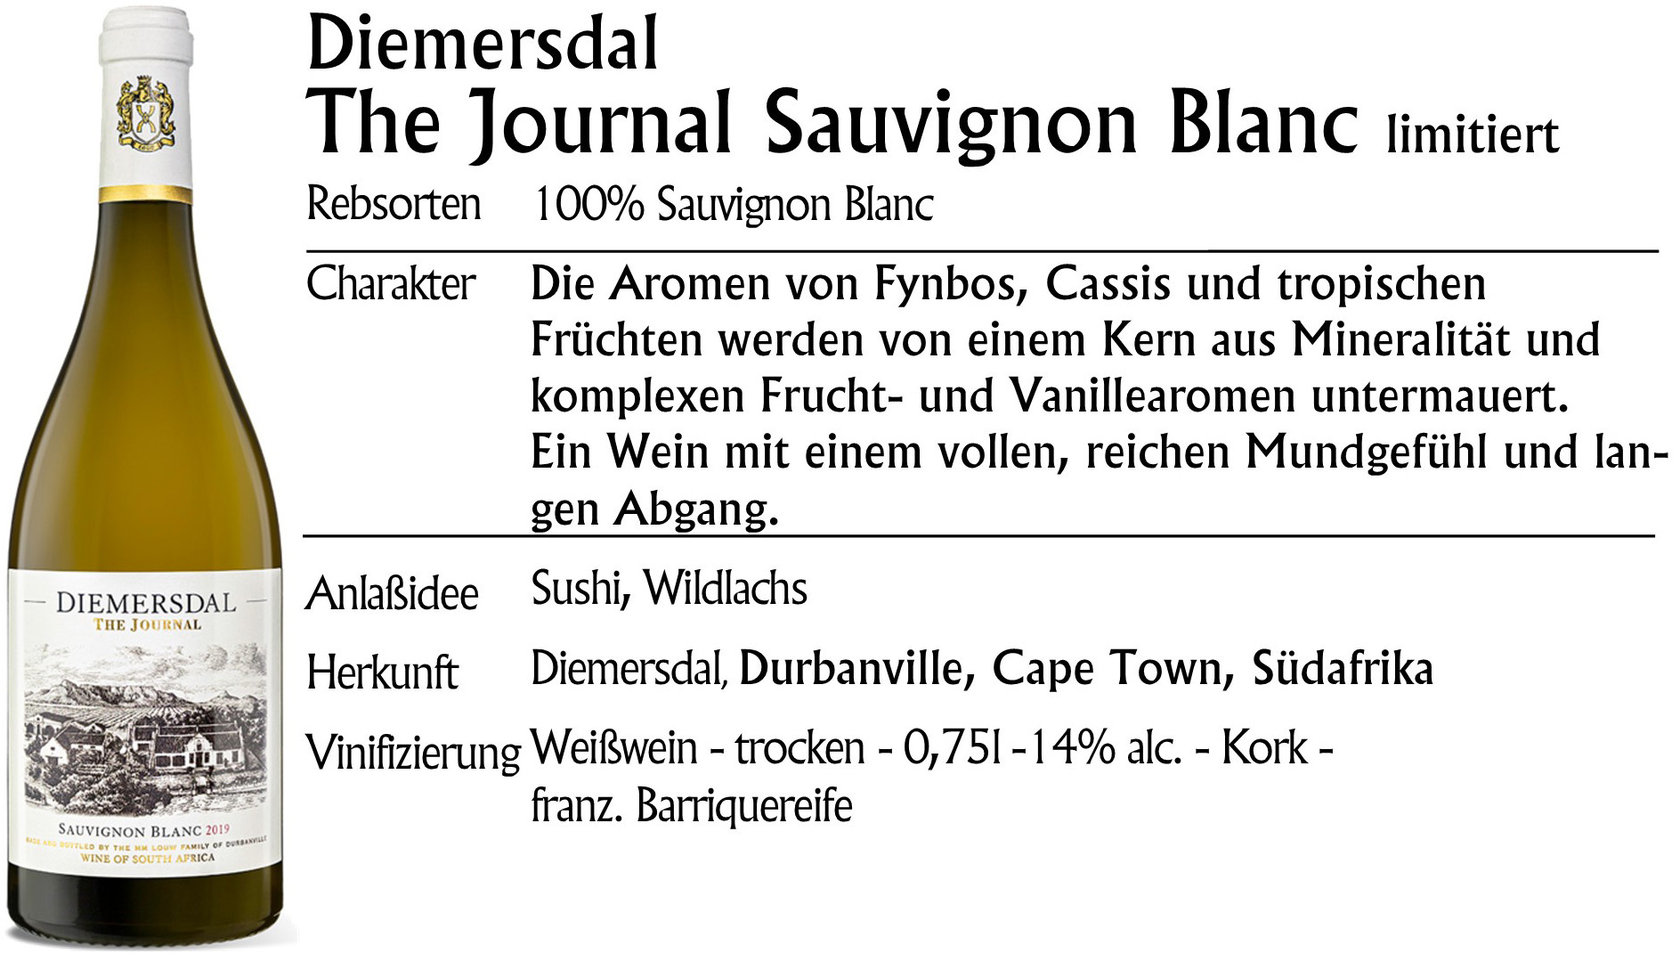 Diemersdal The Journal Sauvignon Blanc 2020 limitiert